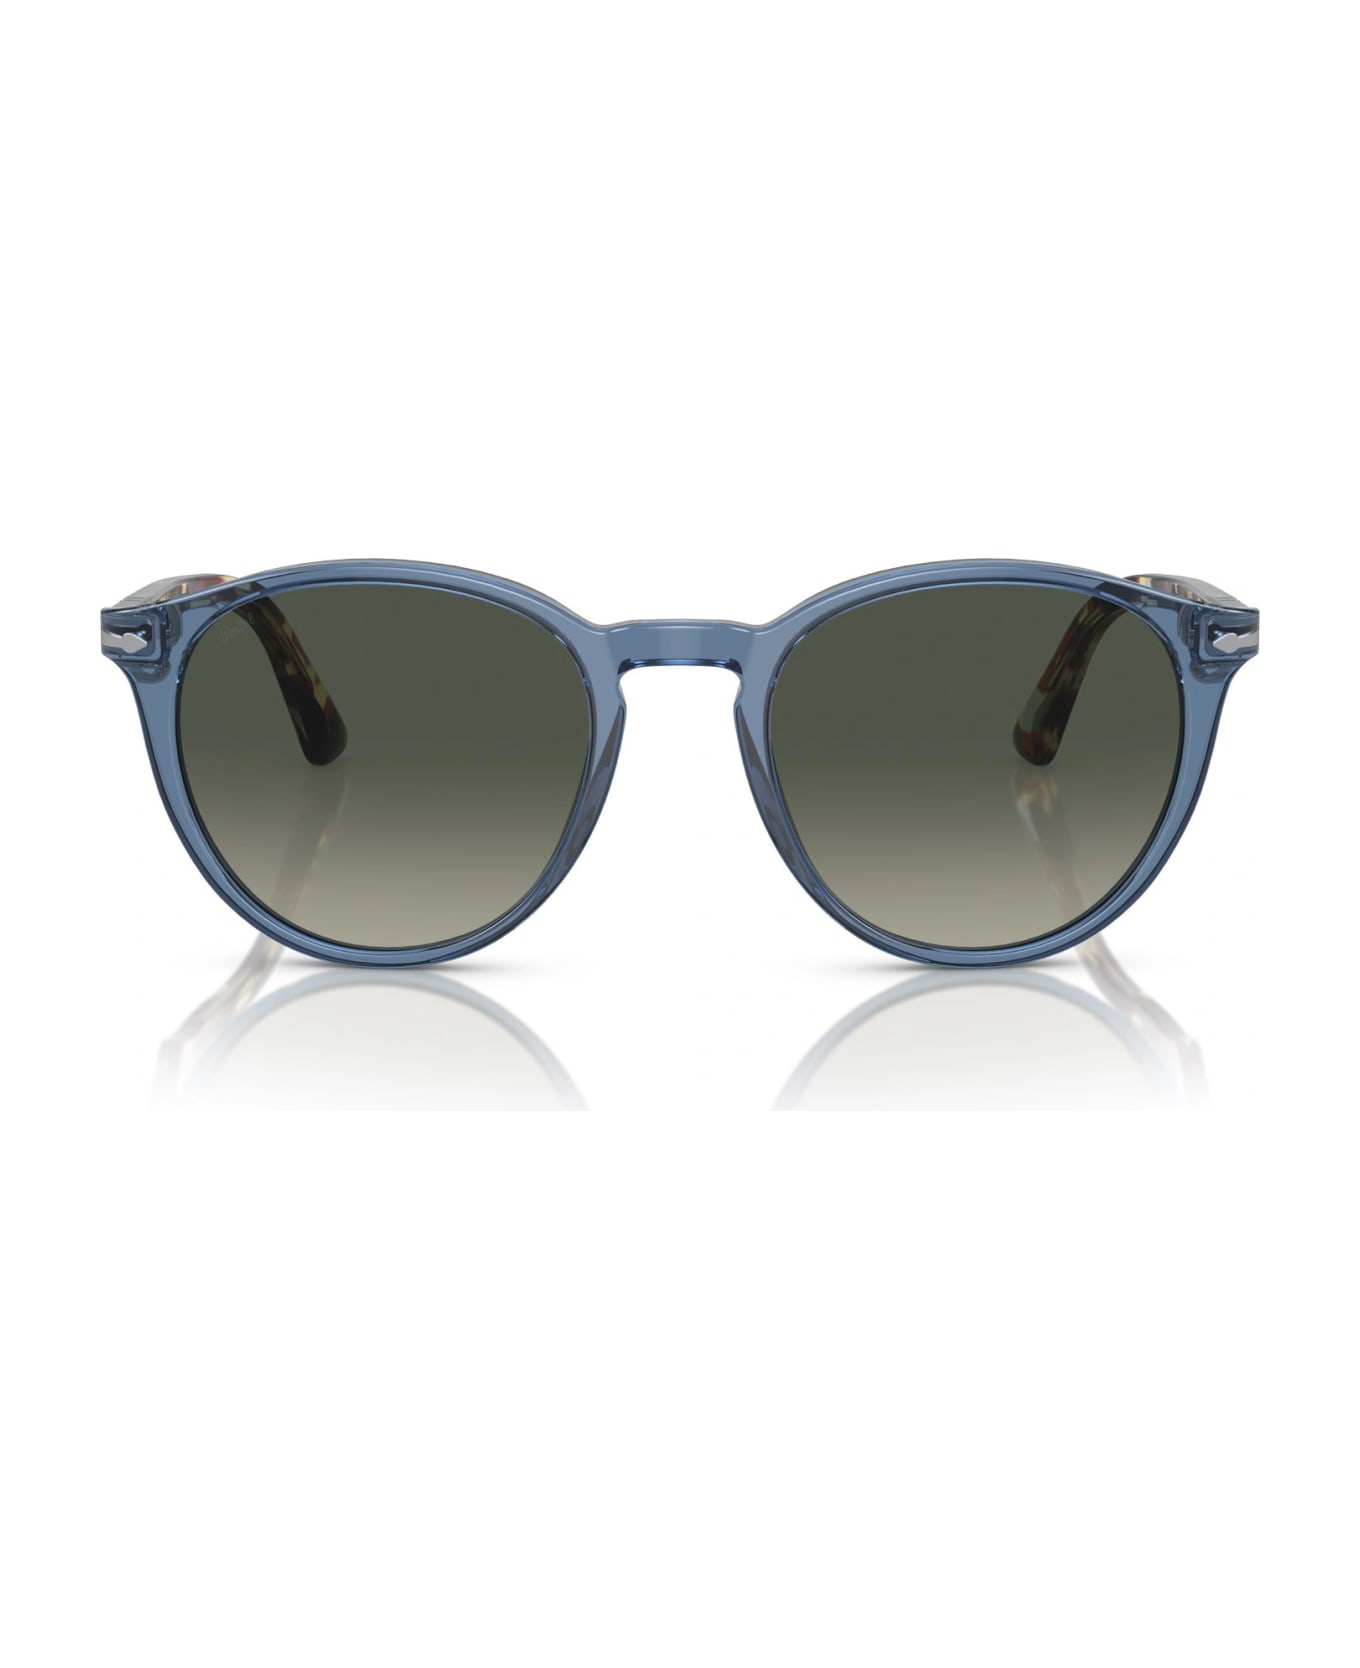 Persol Po3152S 12027/71 Sunglasses - Blu navy lenti grigie degradanti サングラス